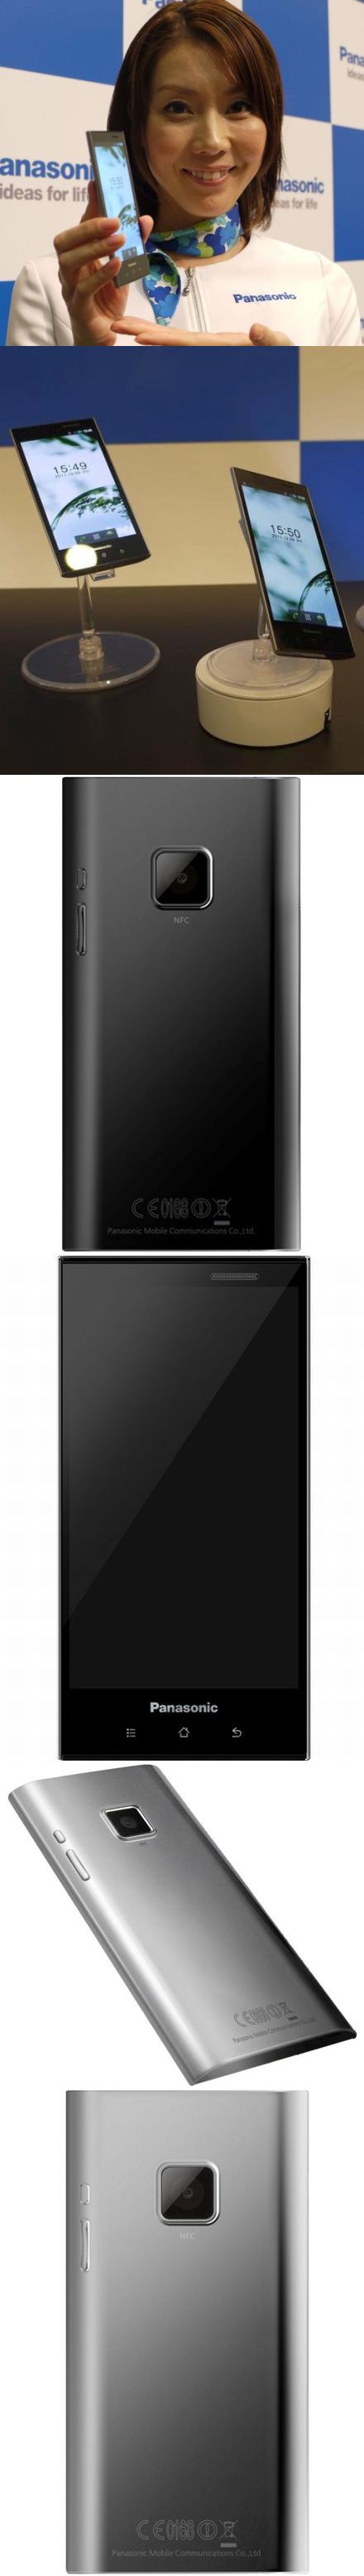 Panasonic mobil 4.3 colos OLED kijelzővel